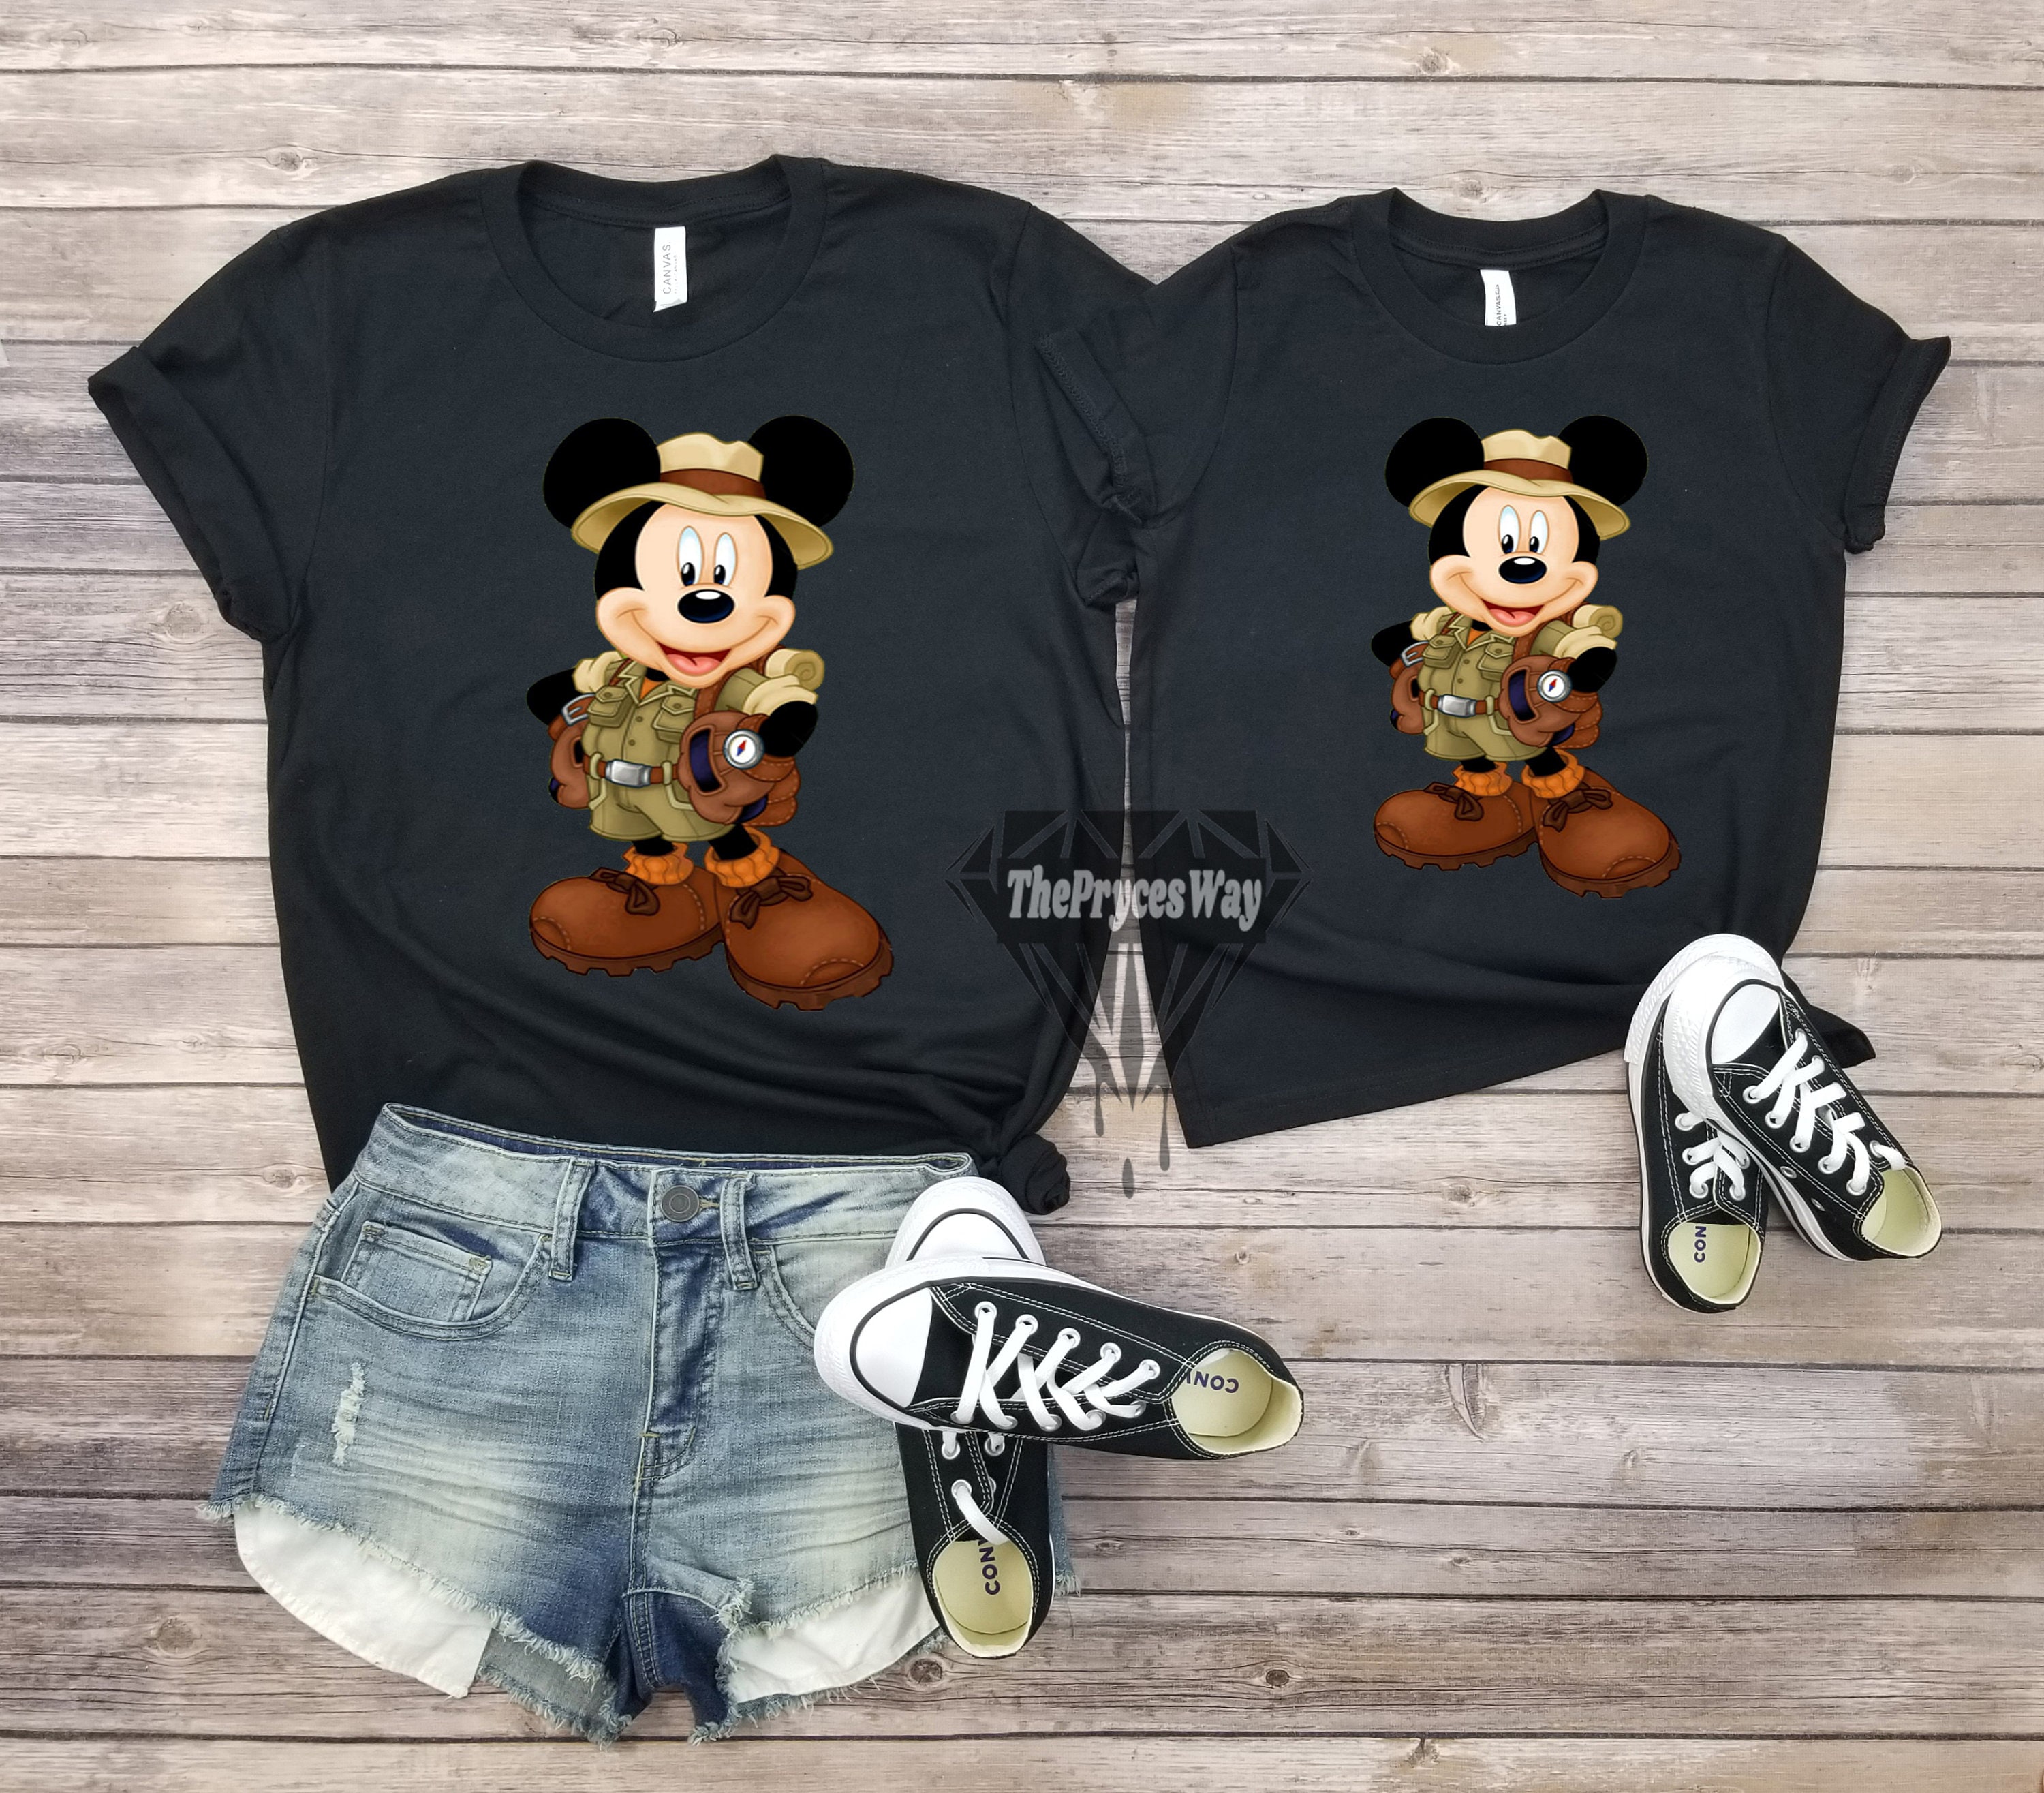 Mickey And Minnie Mouse Gucci Tshirt Womens, Cheap Gucci Tshirt Mens -  Allsoymade